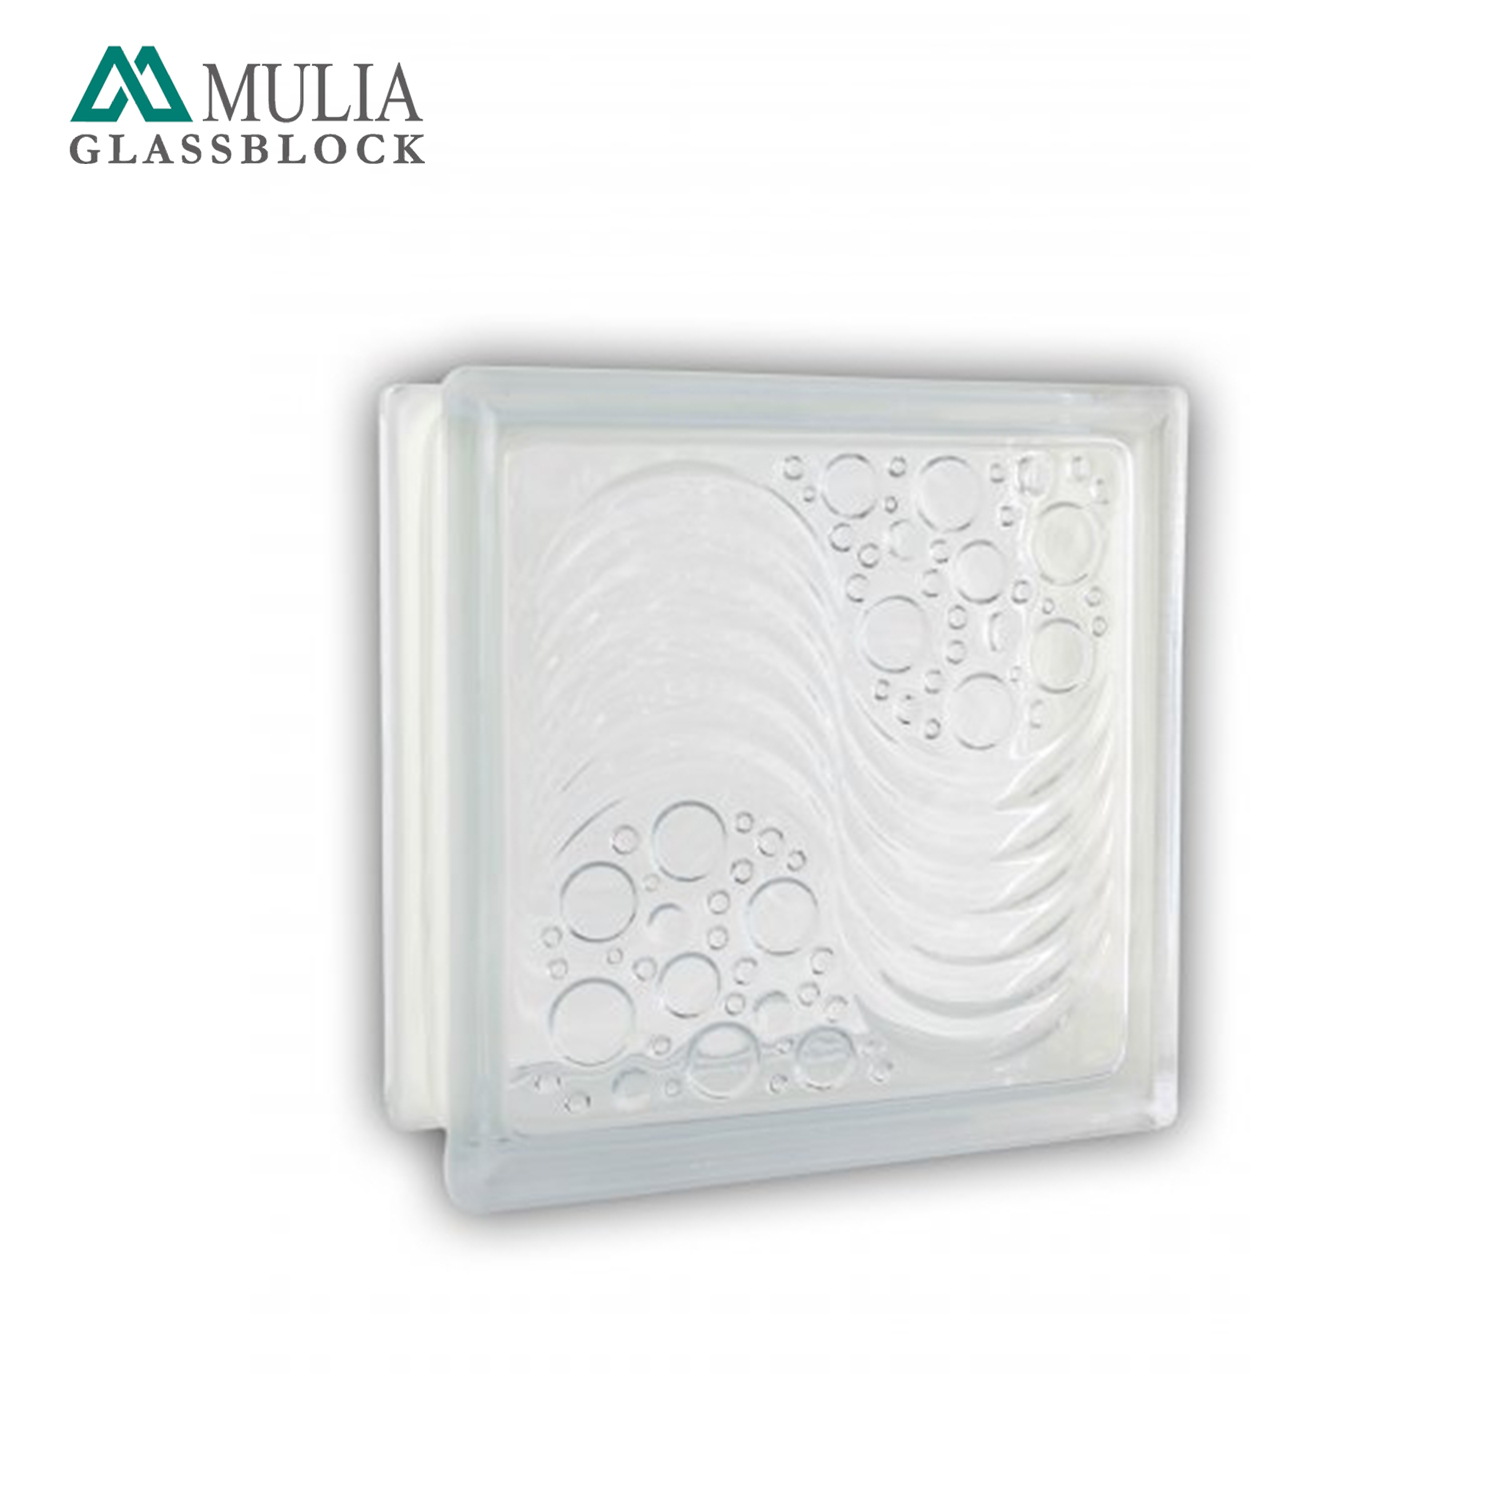 Mulia Glass Block 20X20 Ocean View - Balok Kaca